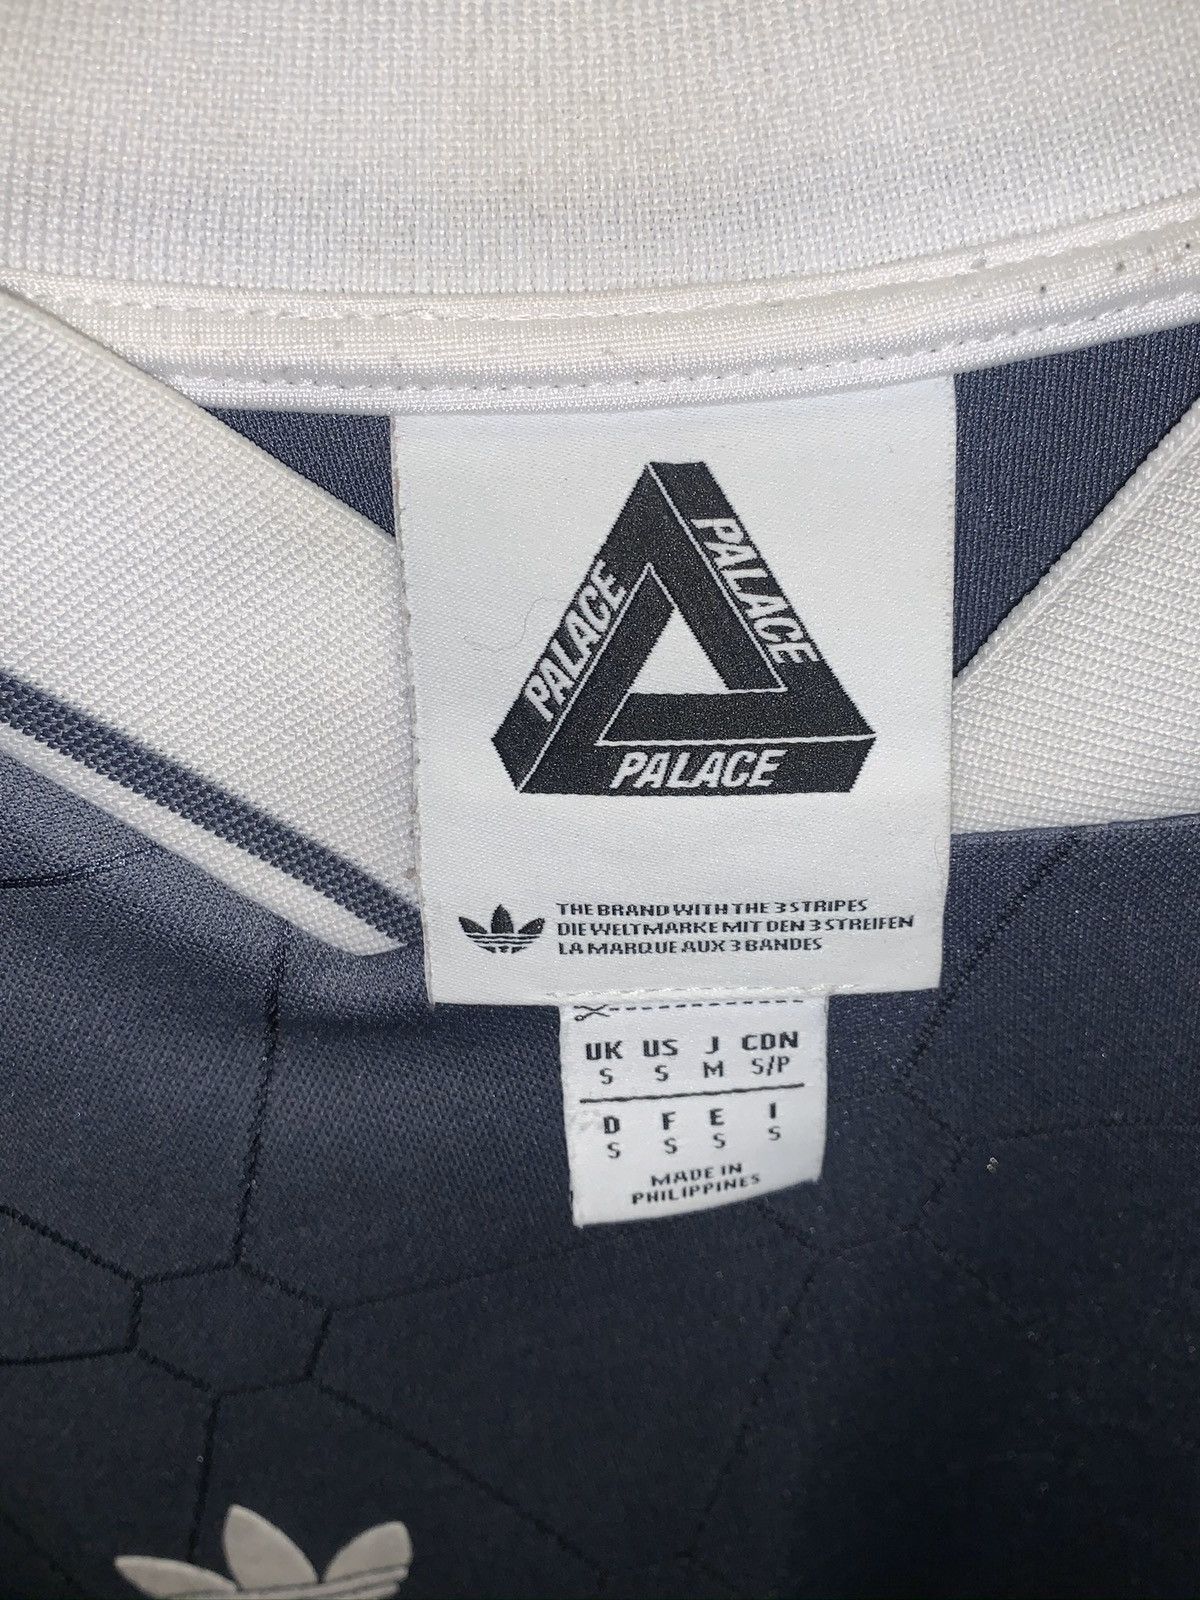 Adidas Palace x Adidas Team Soccer Jersey Shirt Onix SS15 Size US S / EU 44-46 / 1 - 3 Preview